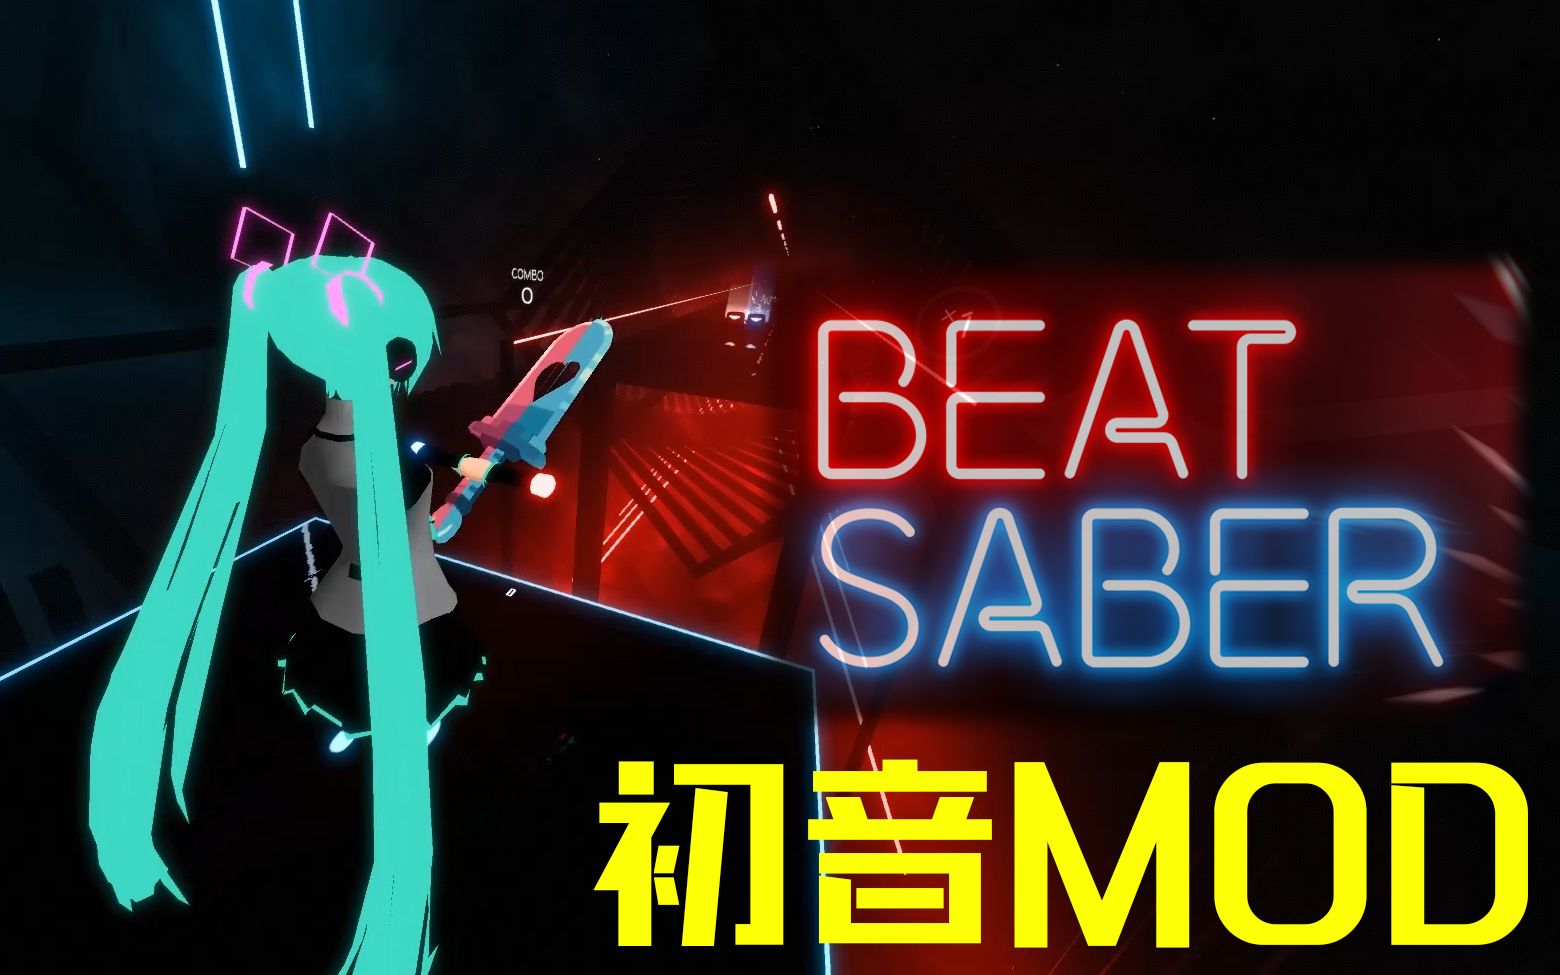 beat saber mod manager may 2019